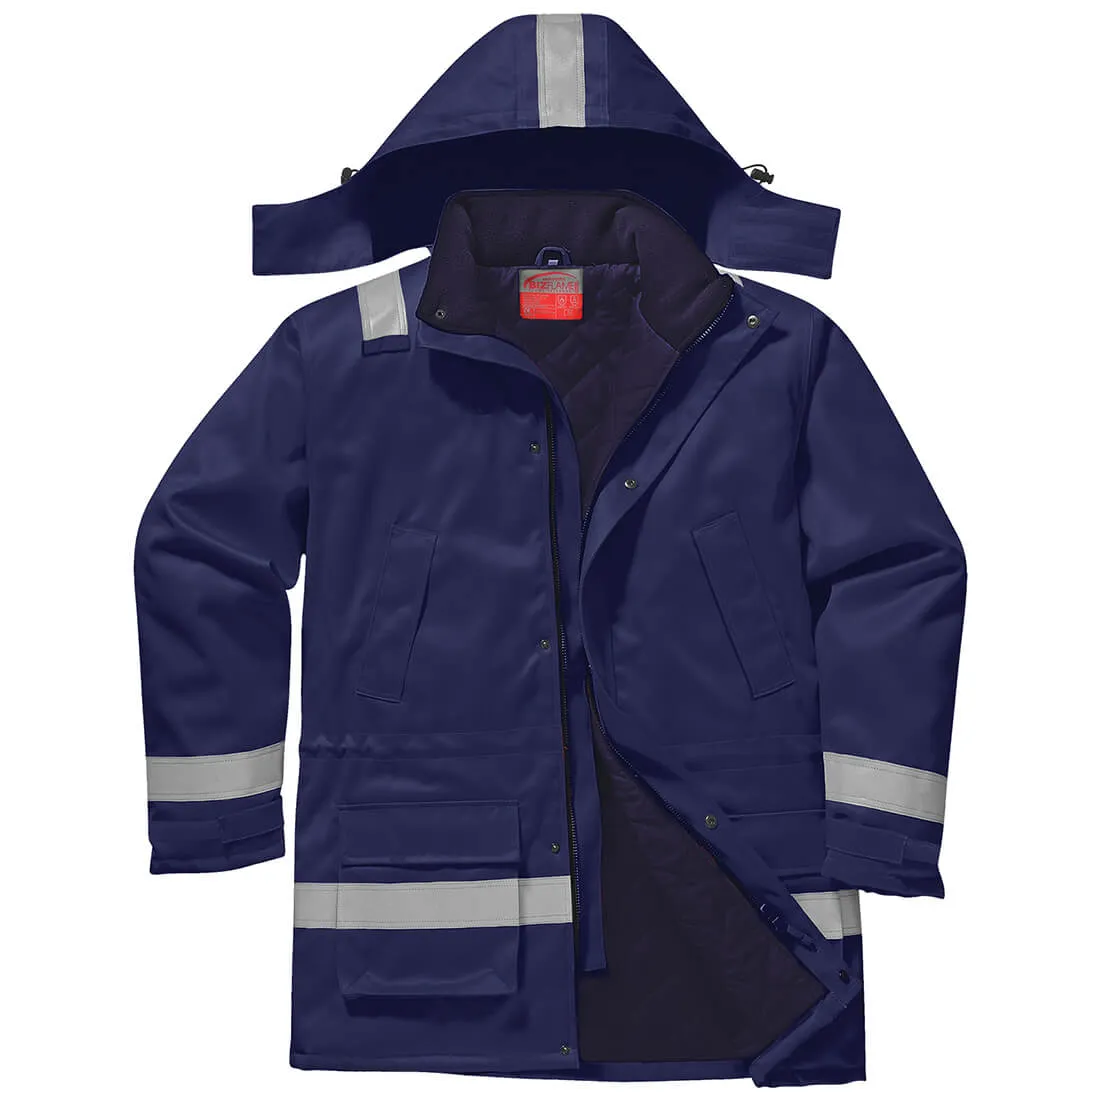 Biz Flame Mens Flame Resistant Antistatic Winter Jacket - Royal Blue, M